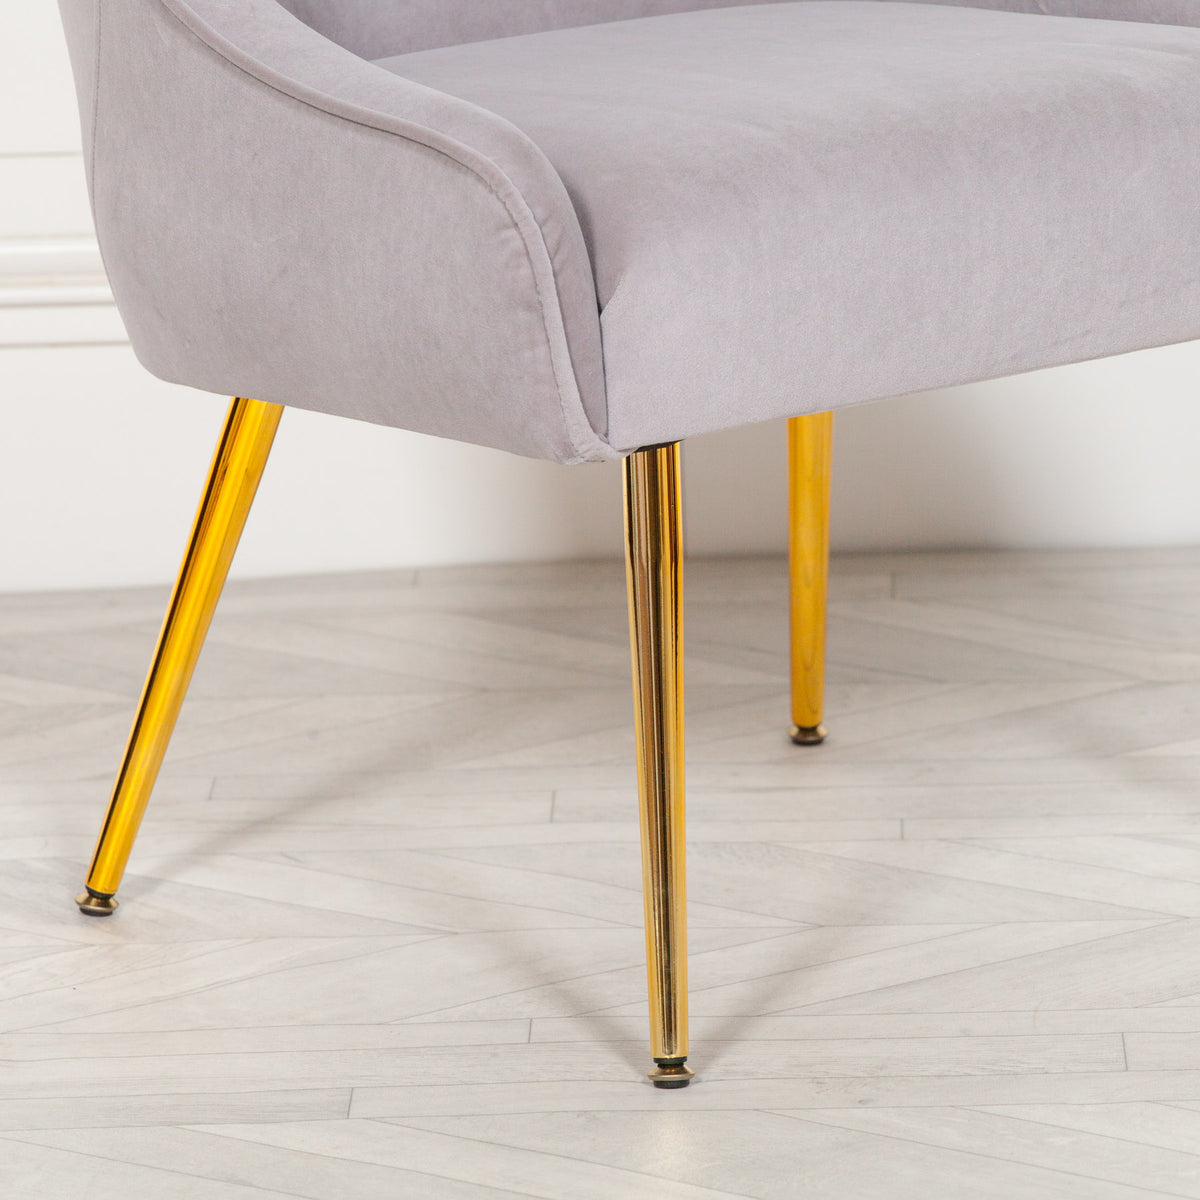 Grey velvet chair with gold legs